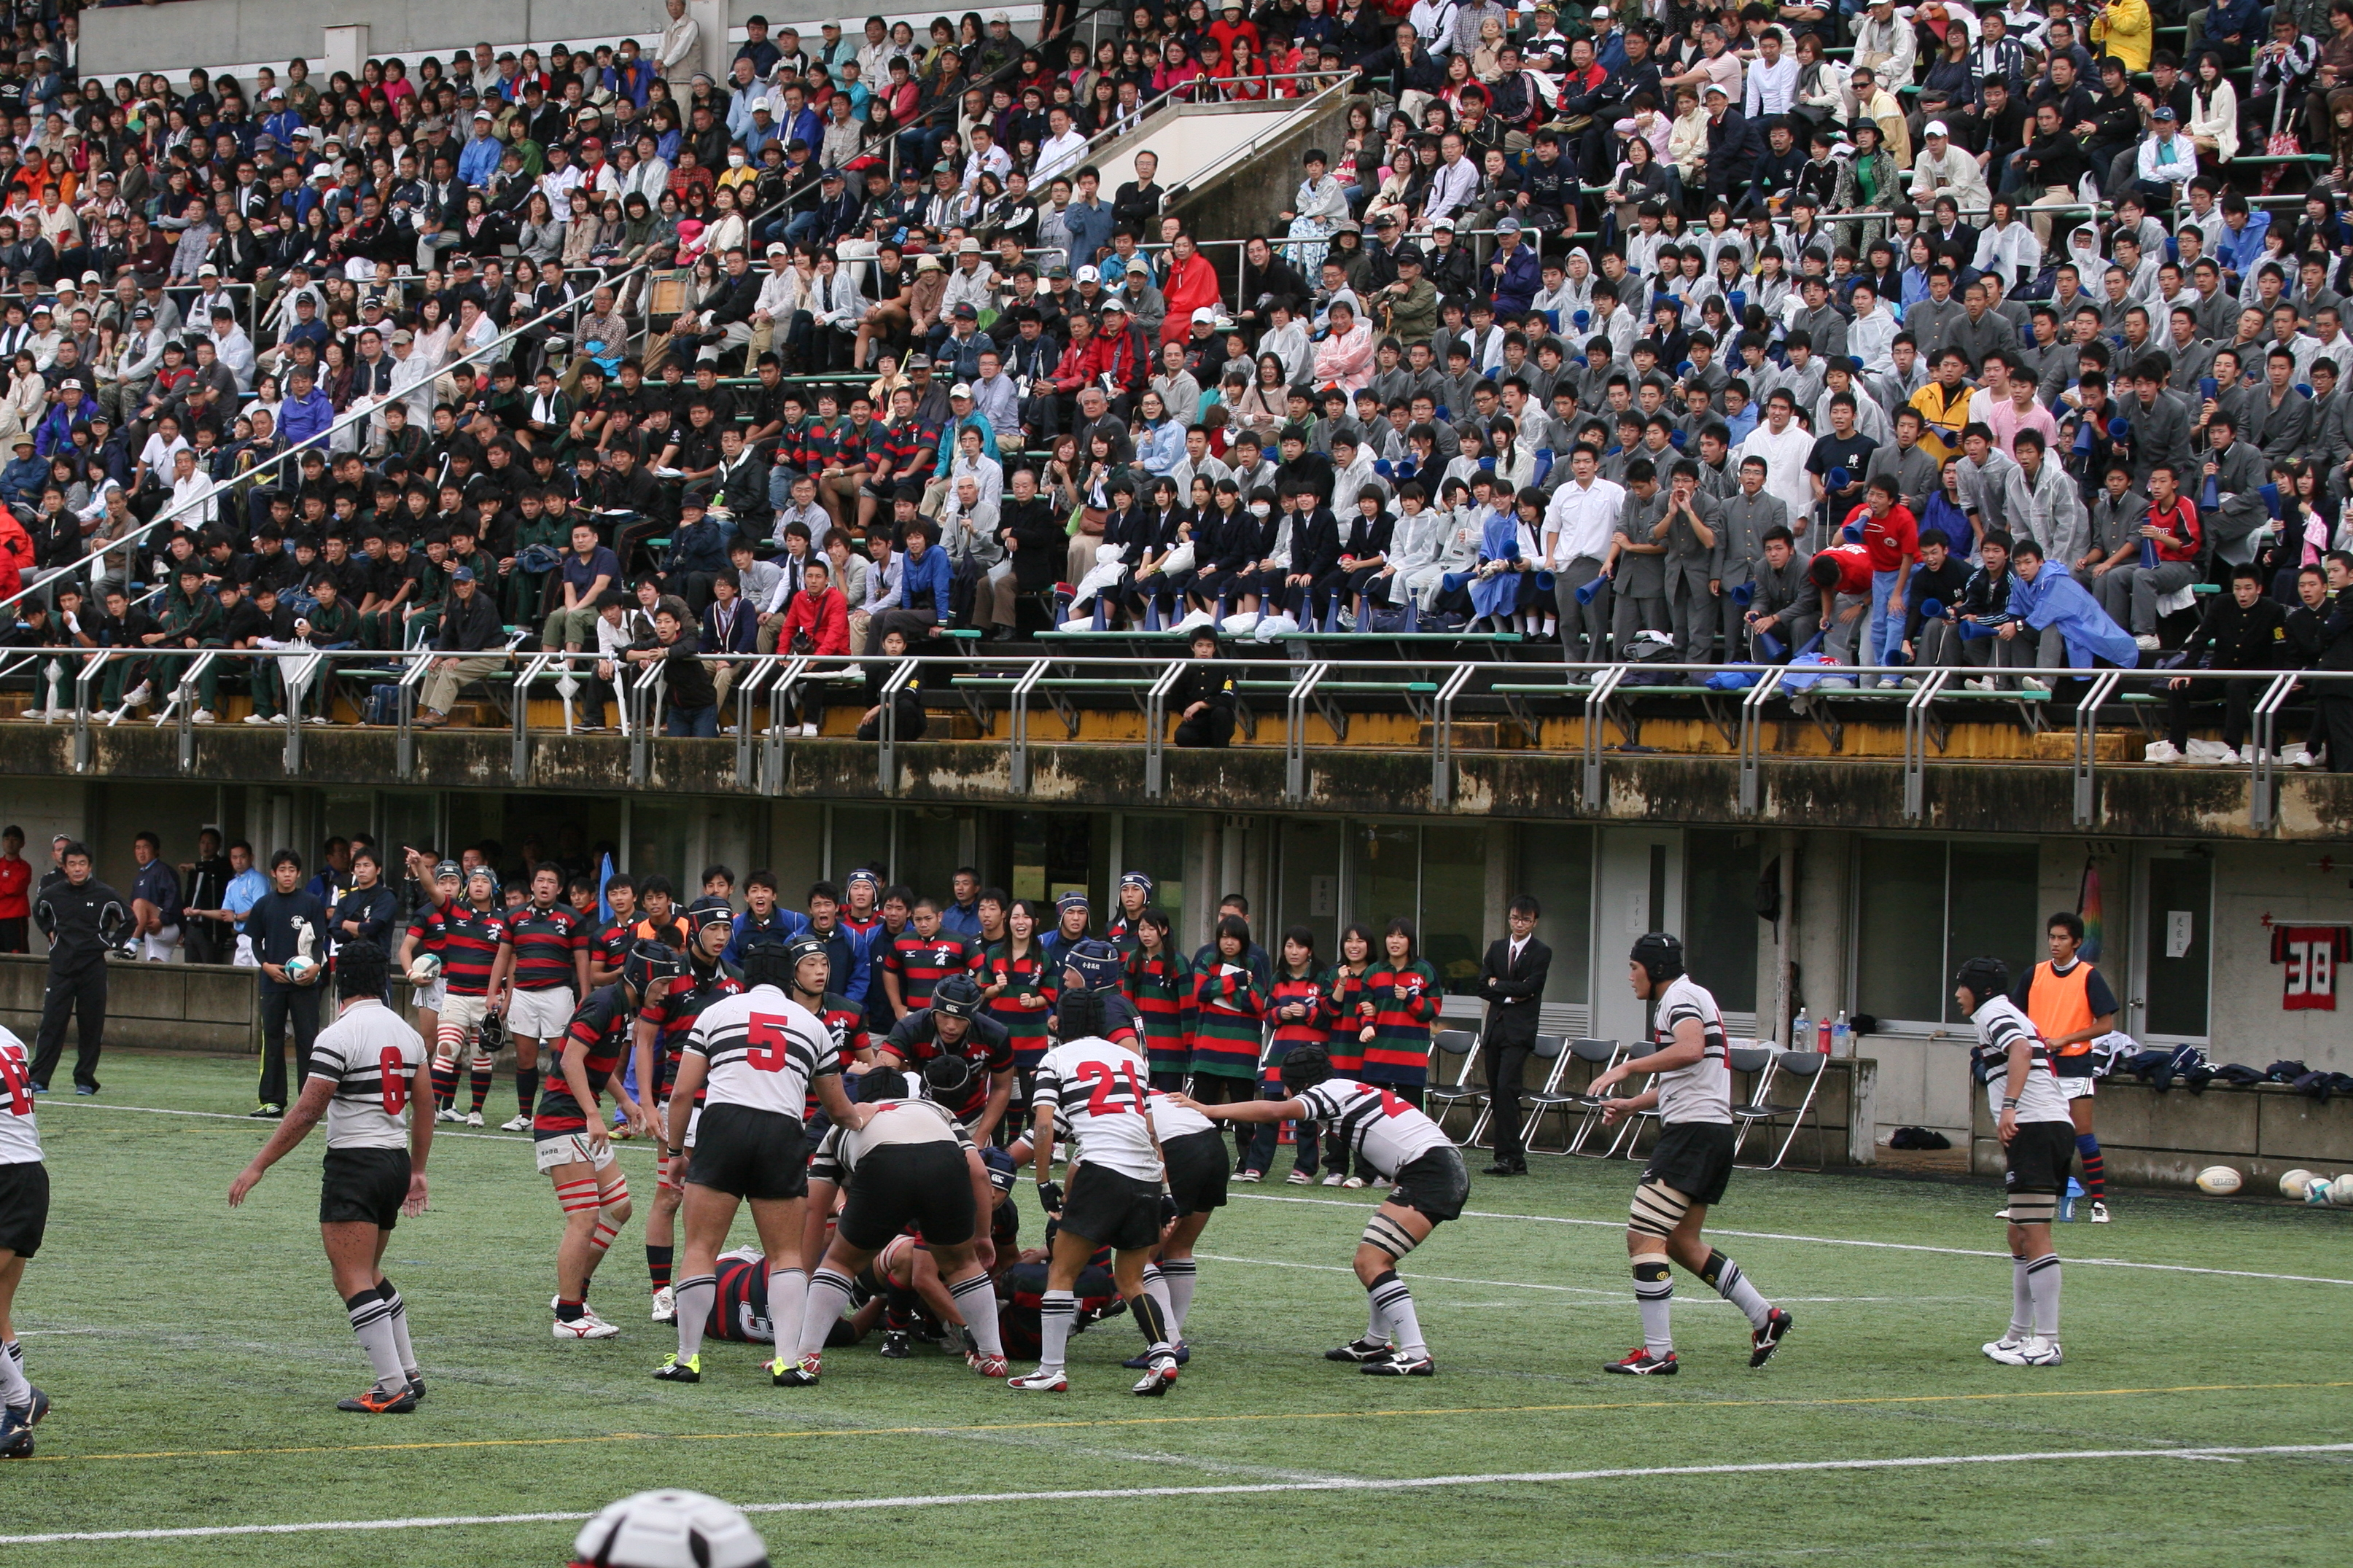 http://kokura-rugby.sakura.ne.jp/2011.11.6-3-31.JPG